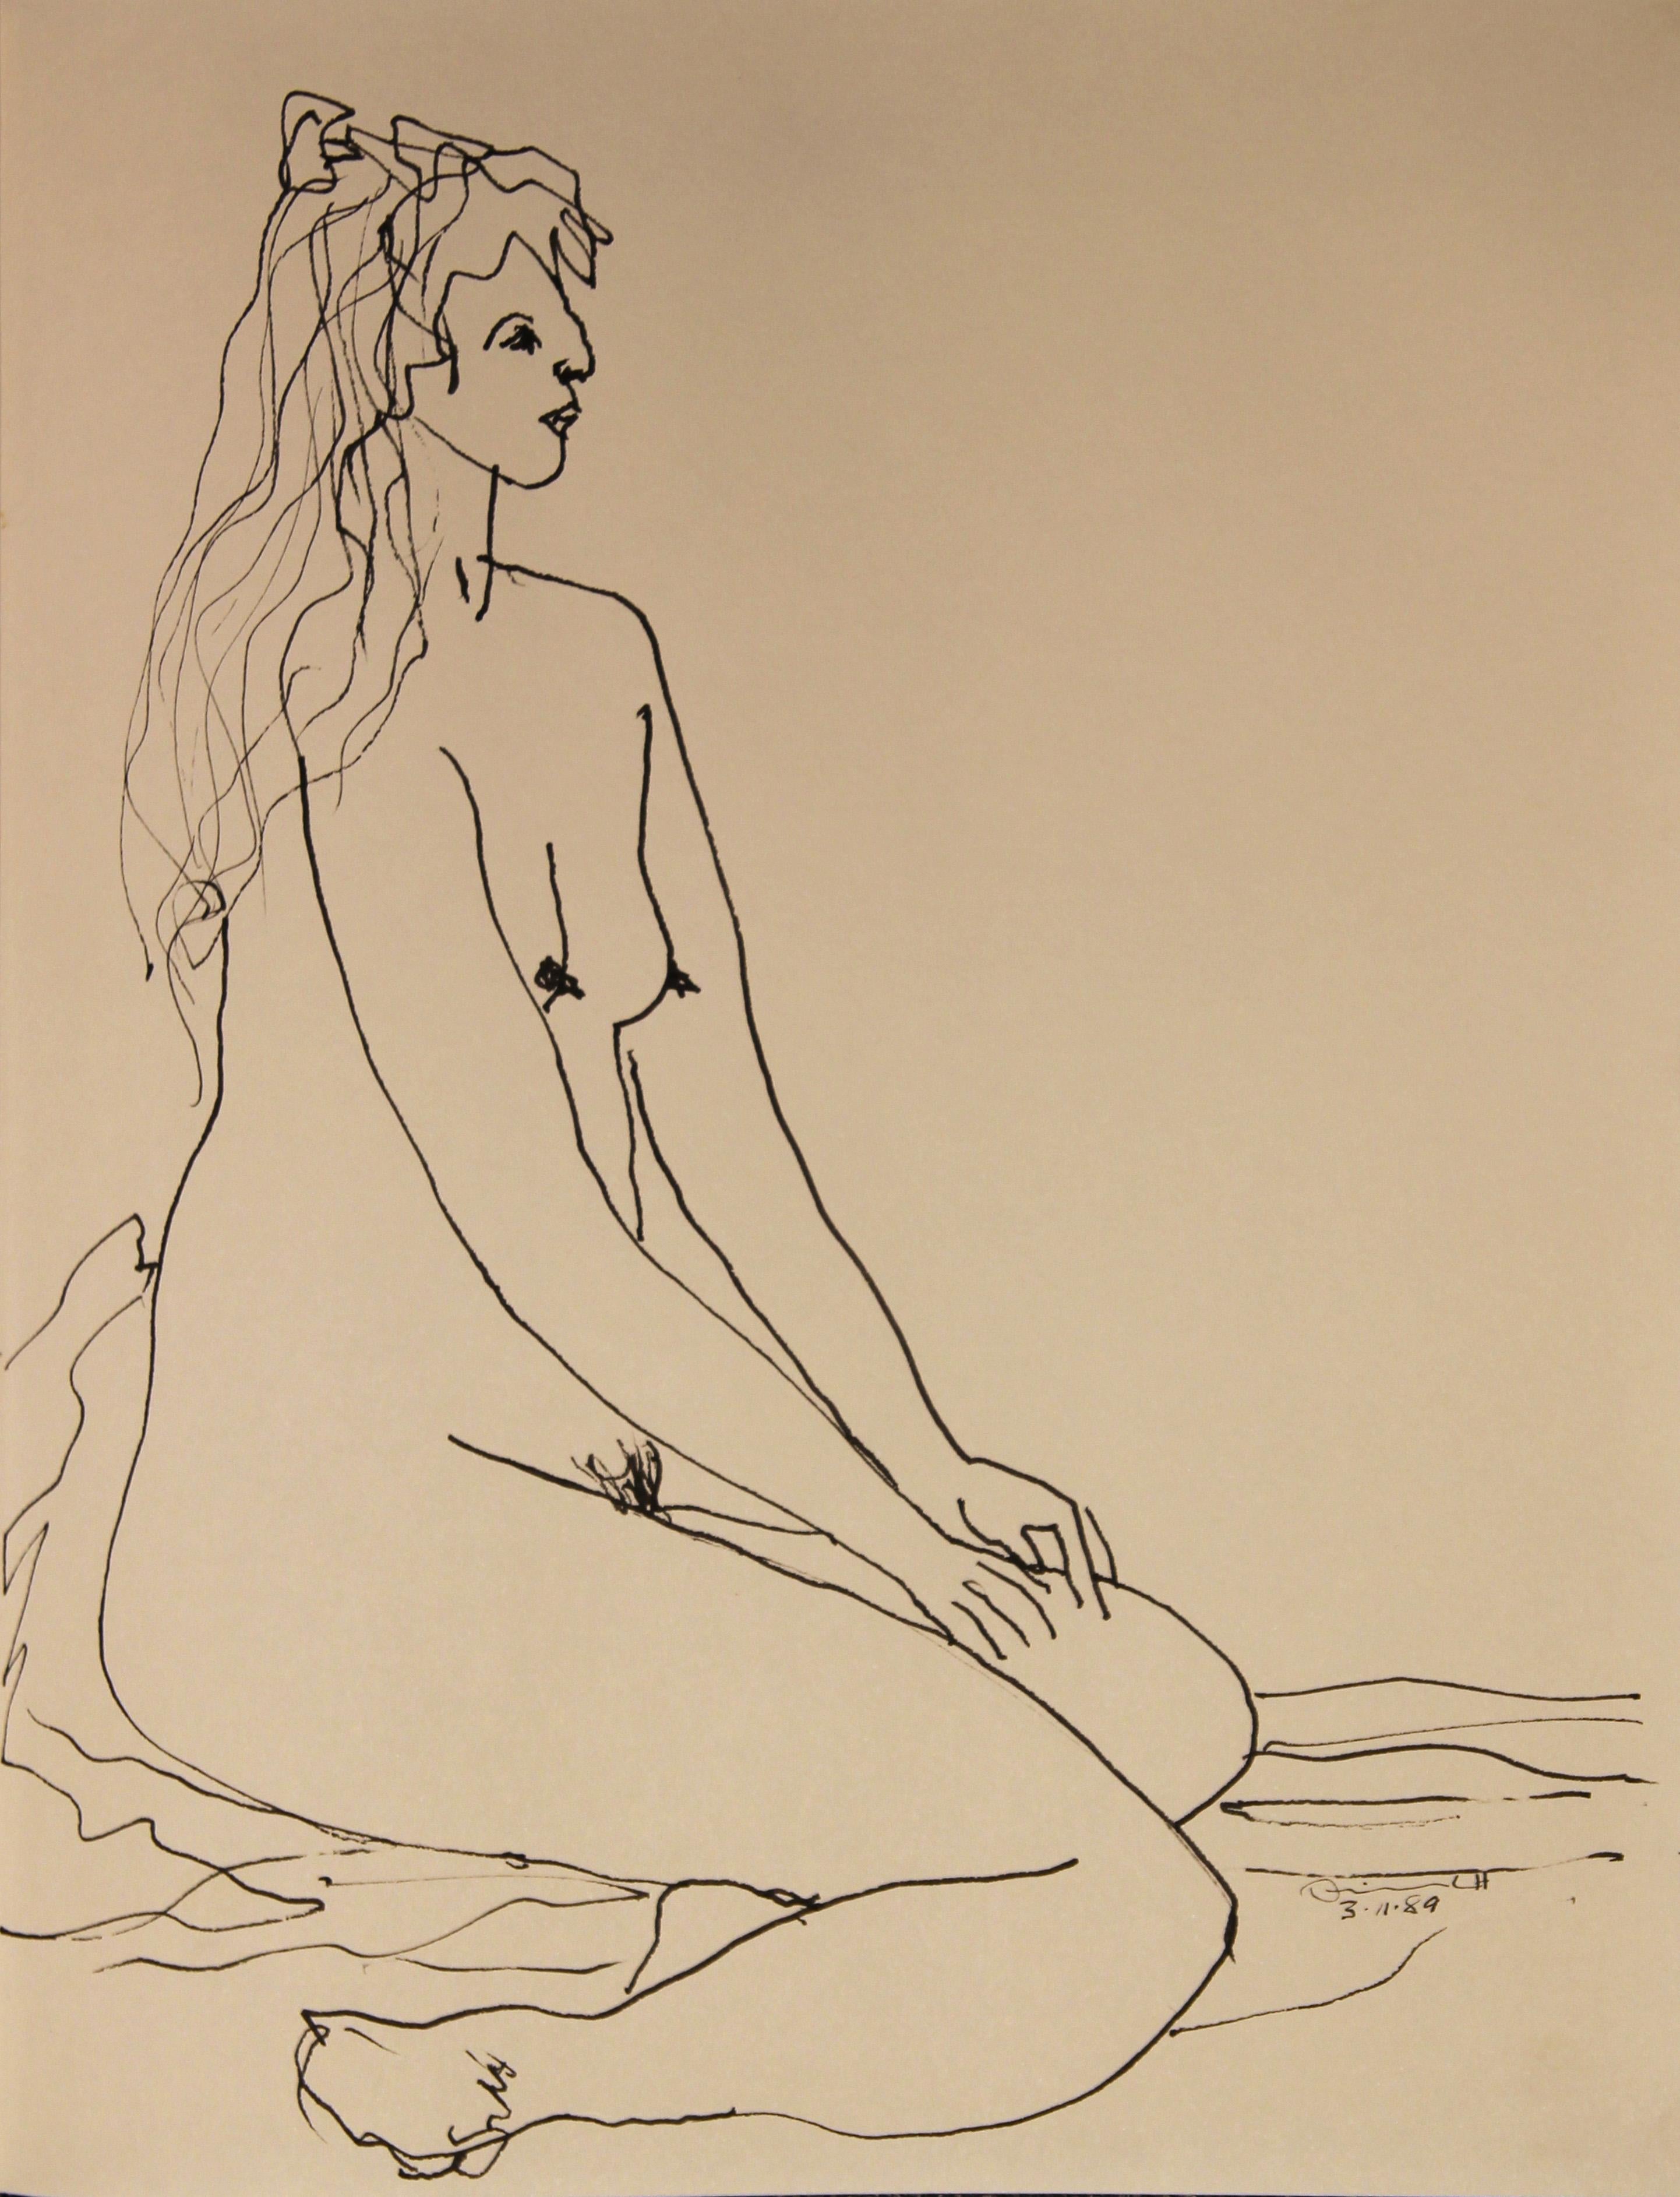 Frank Dolejska Figurative Art - Modern Abstract Black Ink Line Drawing of a Seated Female Nude